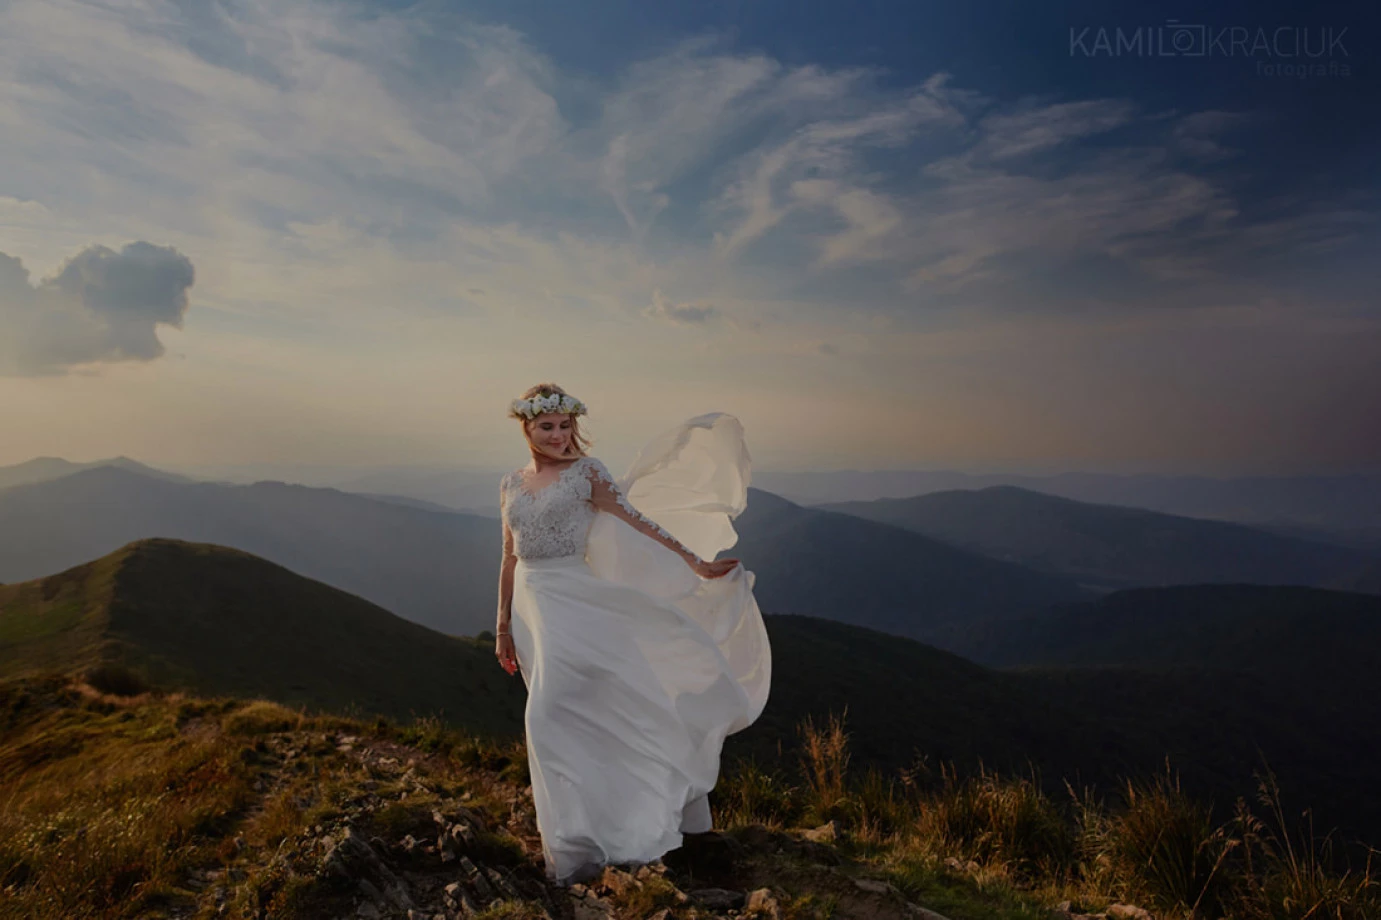 fotograf biala-podlaska kamil-kraciuk-fotografia-slubna portfolio zdjecia slubne inspiracje wesele plener slubny sesja slubna